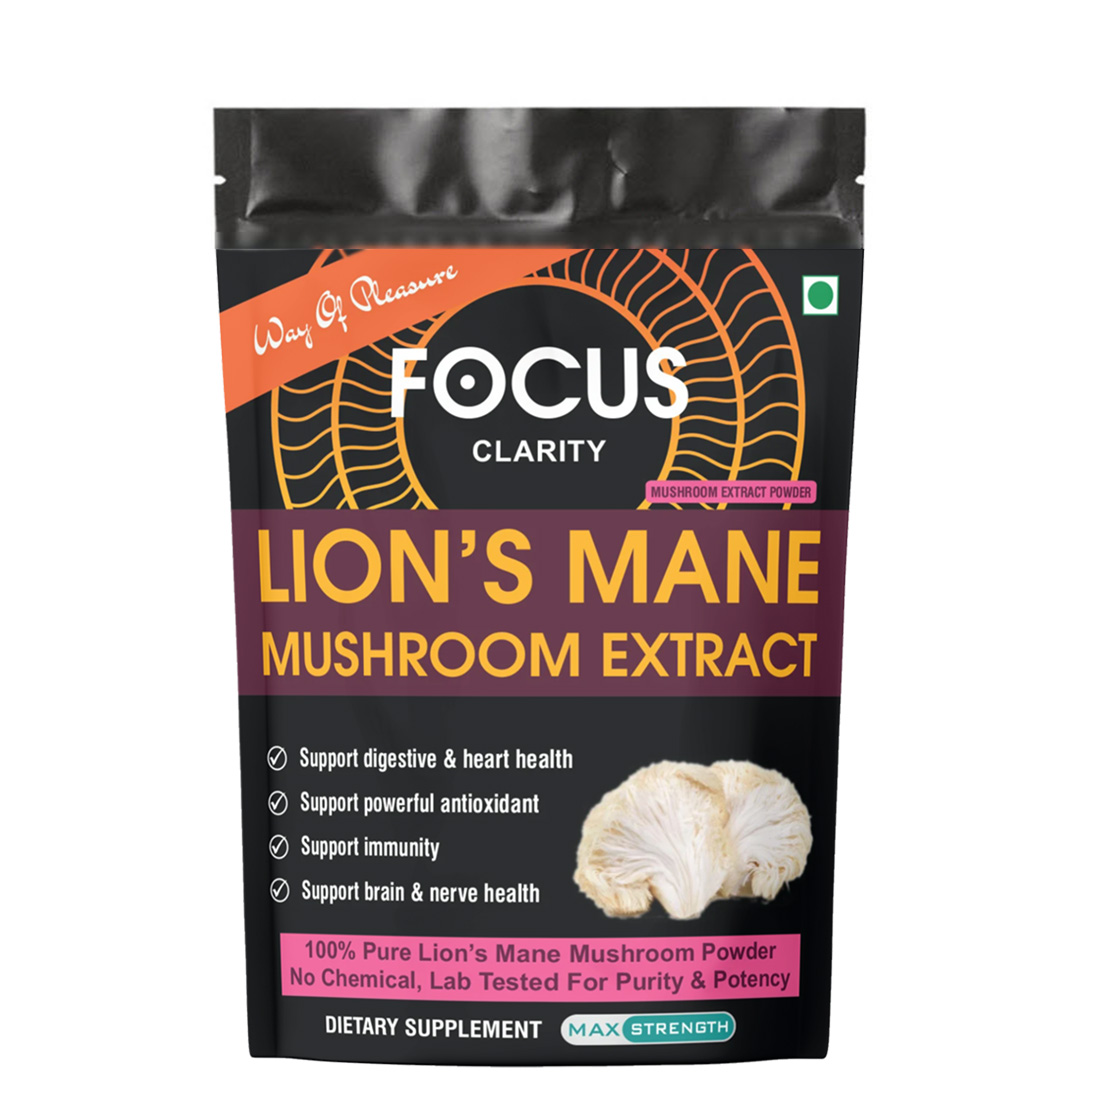 Lion's mane Mushroom, Focus, Lion's mane mushroom coffee, and Lion's Mane capsules help to improve immunity, antioxidants, and sleep quality. Mushroom Supplement, Lion's Mane mushroom extract.